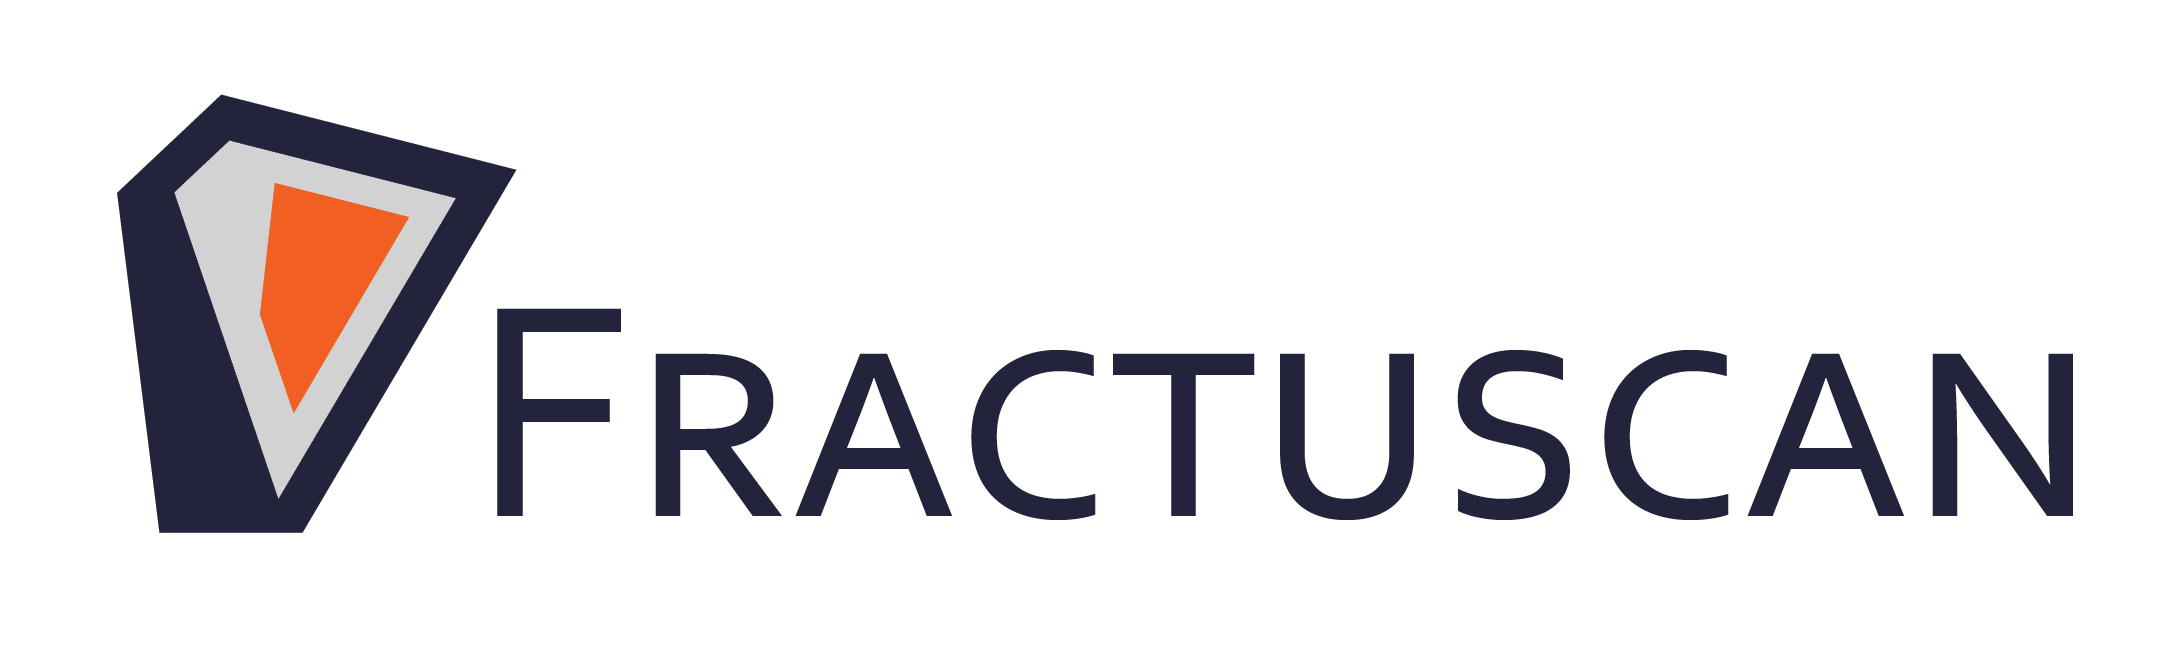 Fractuscan Oy